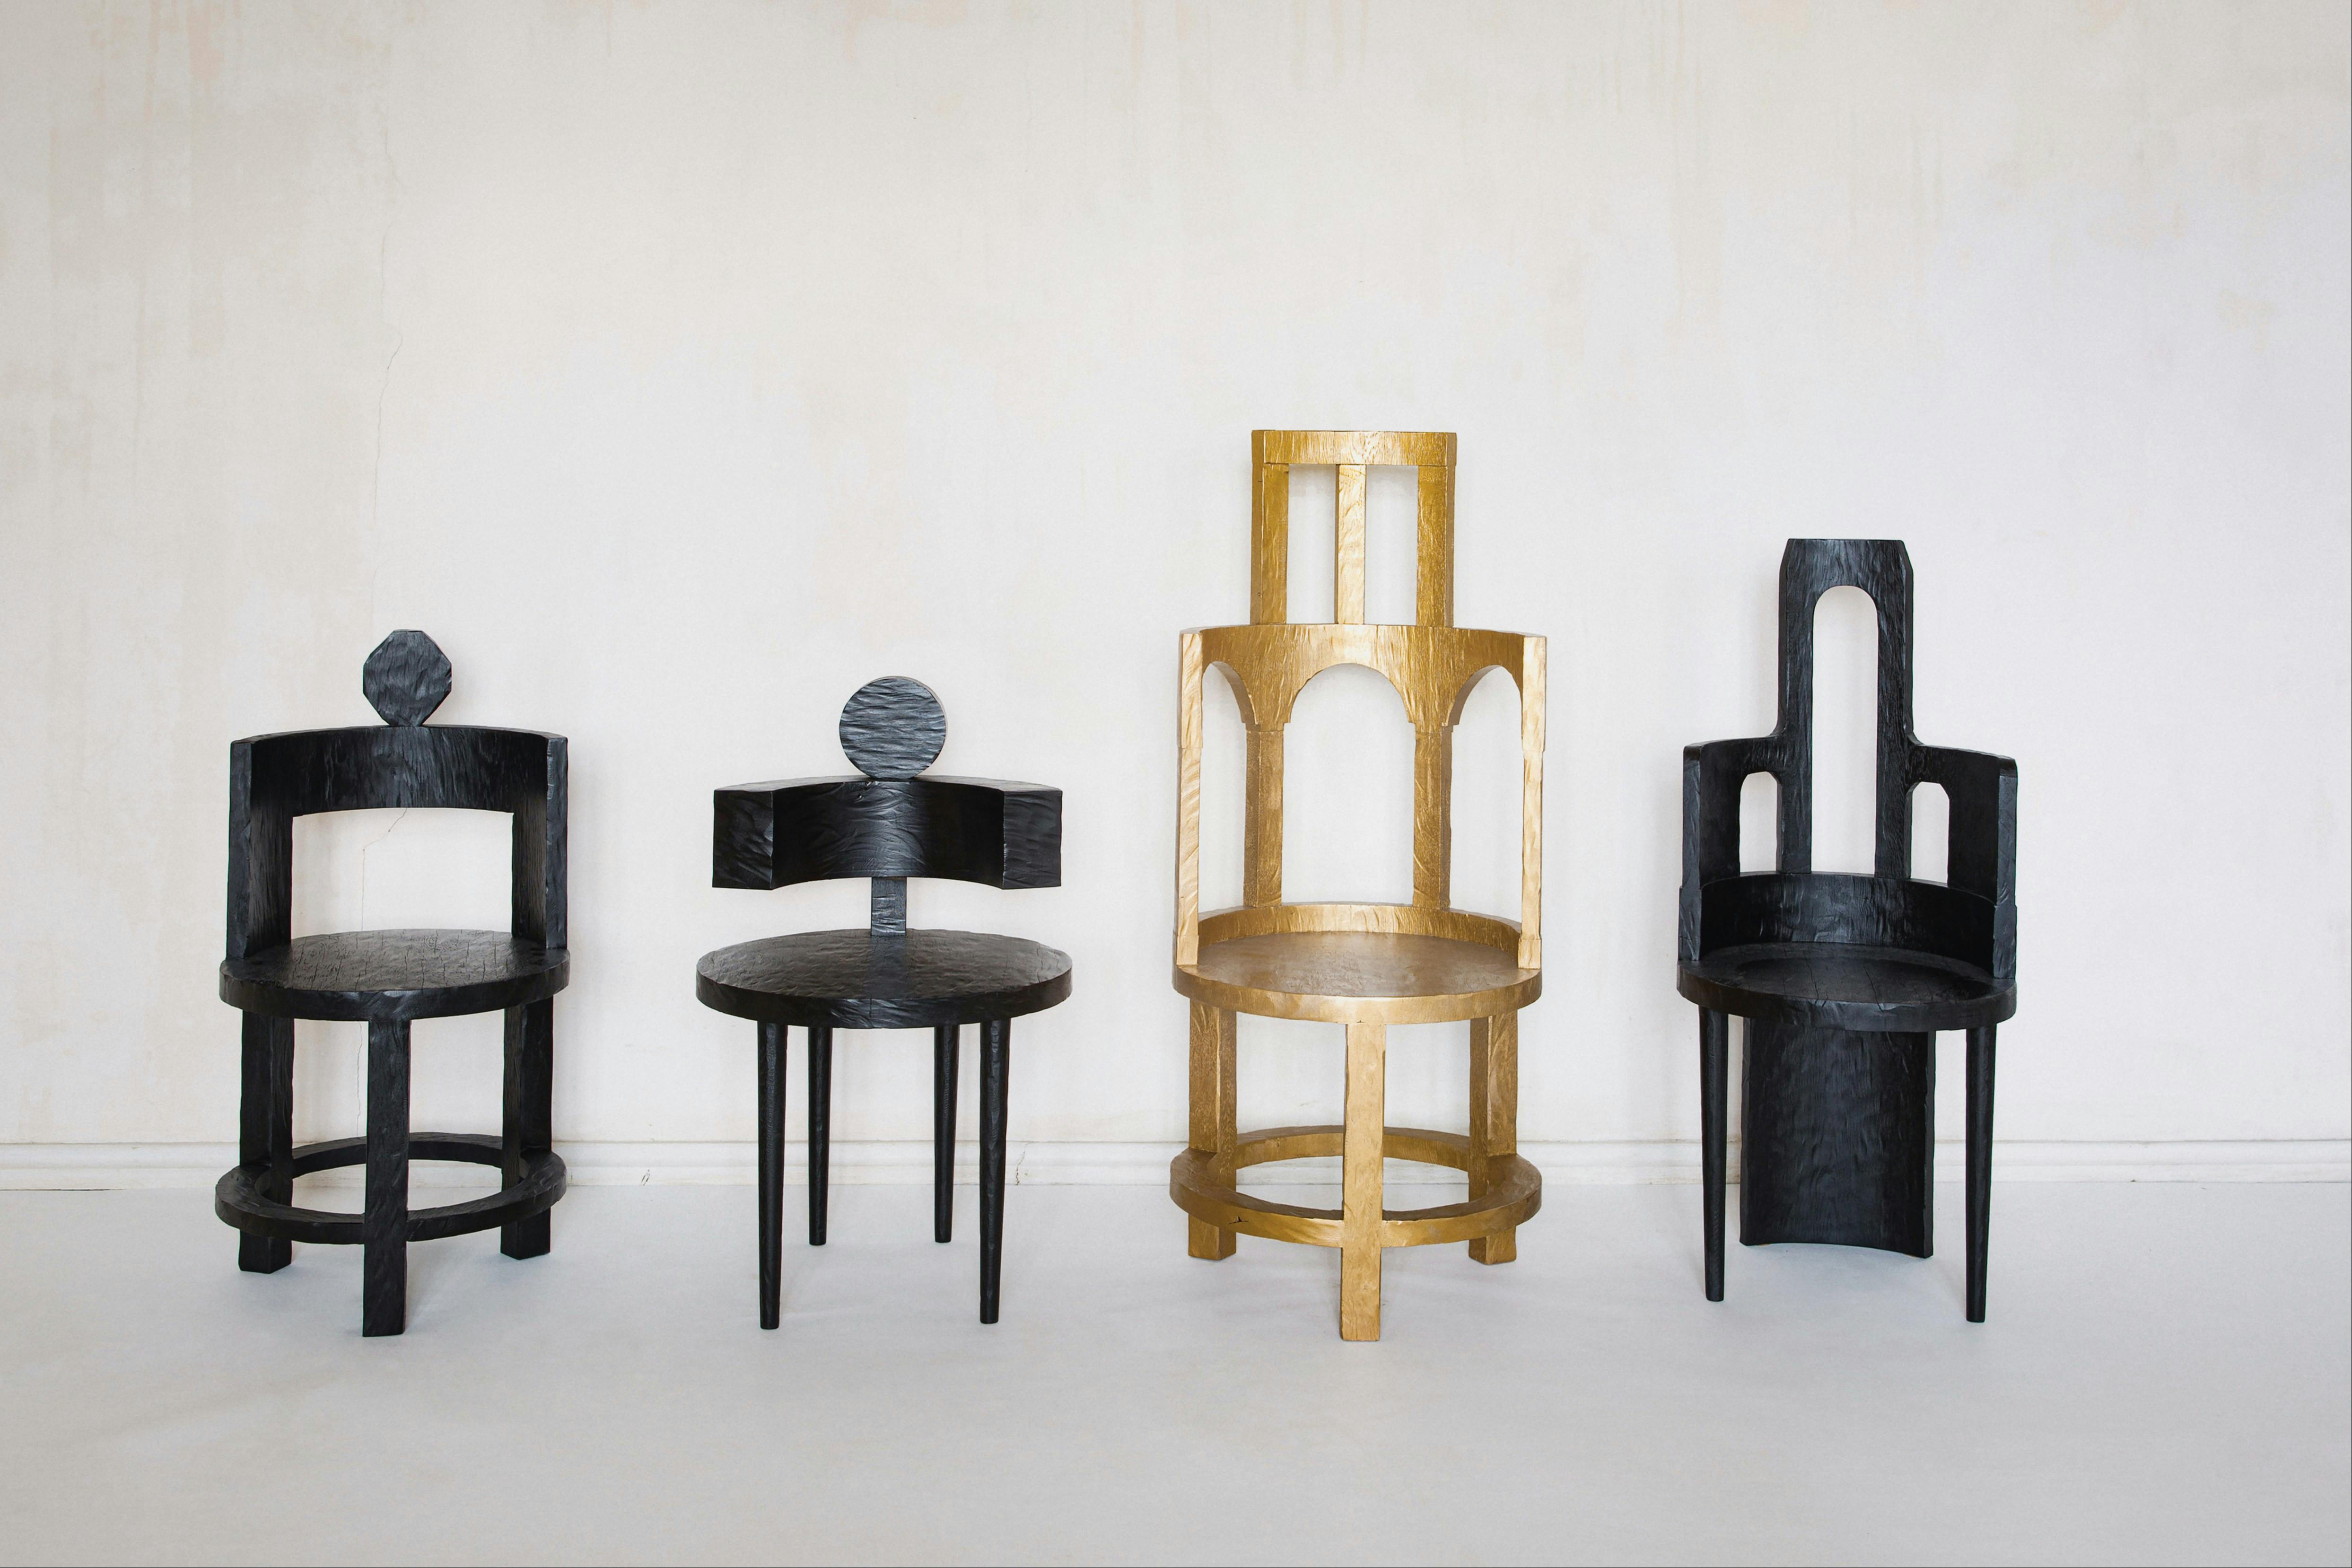 Sculptural Chairs I, II, Gold, III